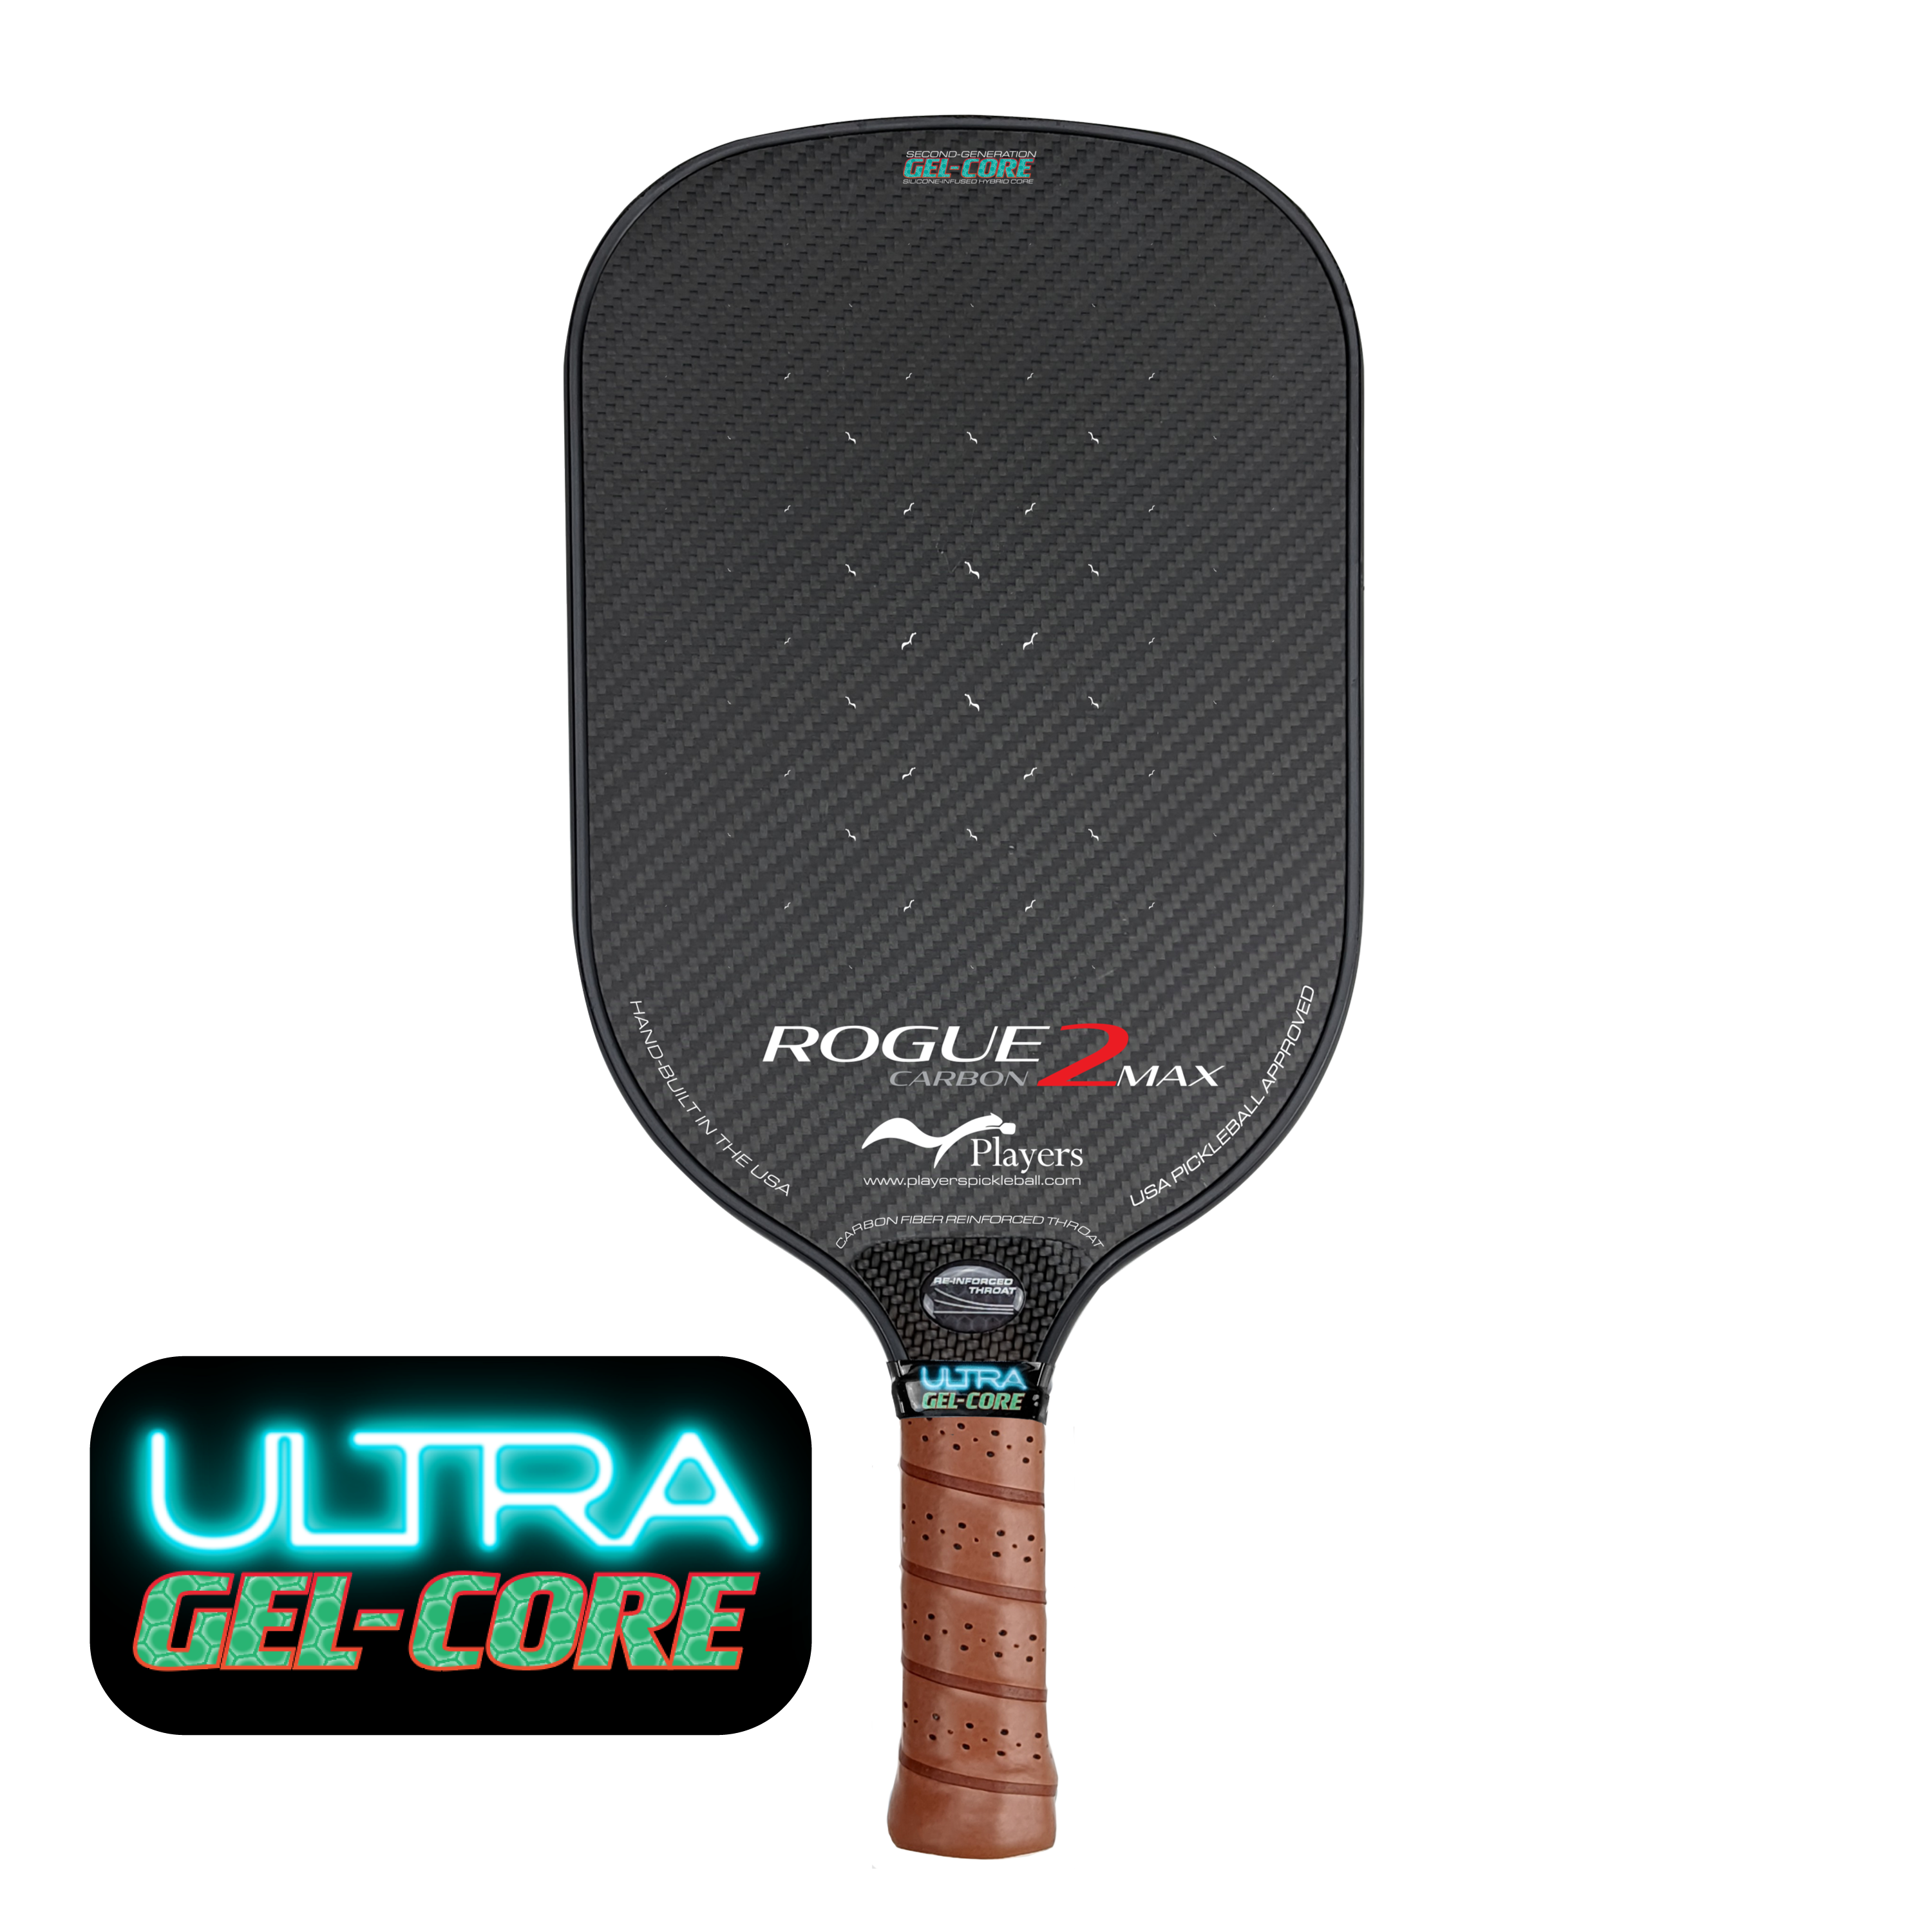 Rogue2MAX Carbon Ultra Gel-Core (Maximum Face)